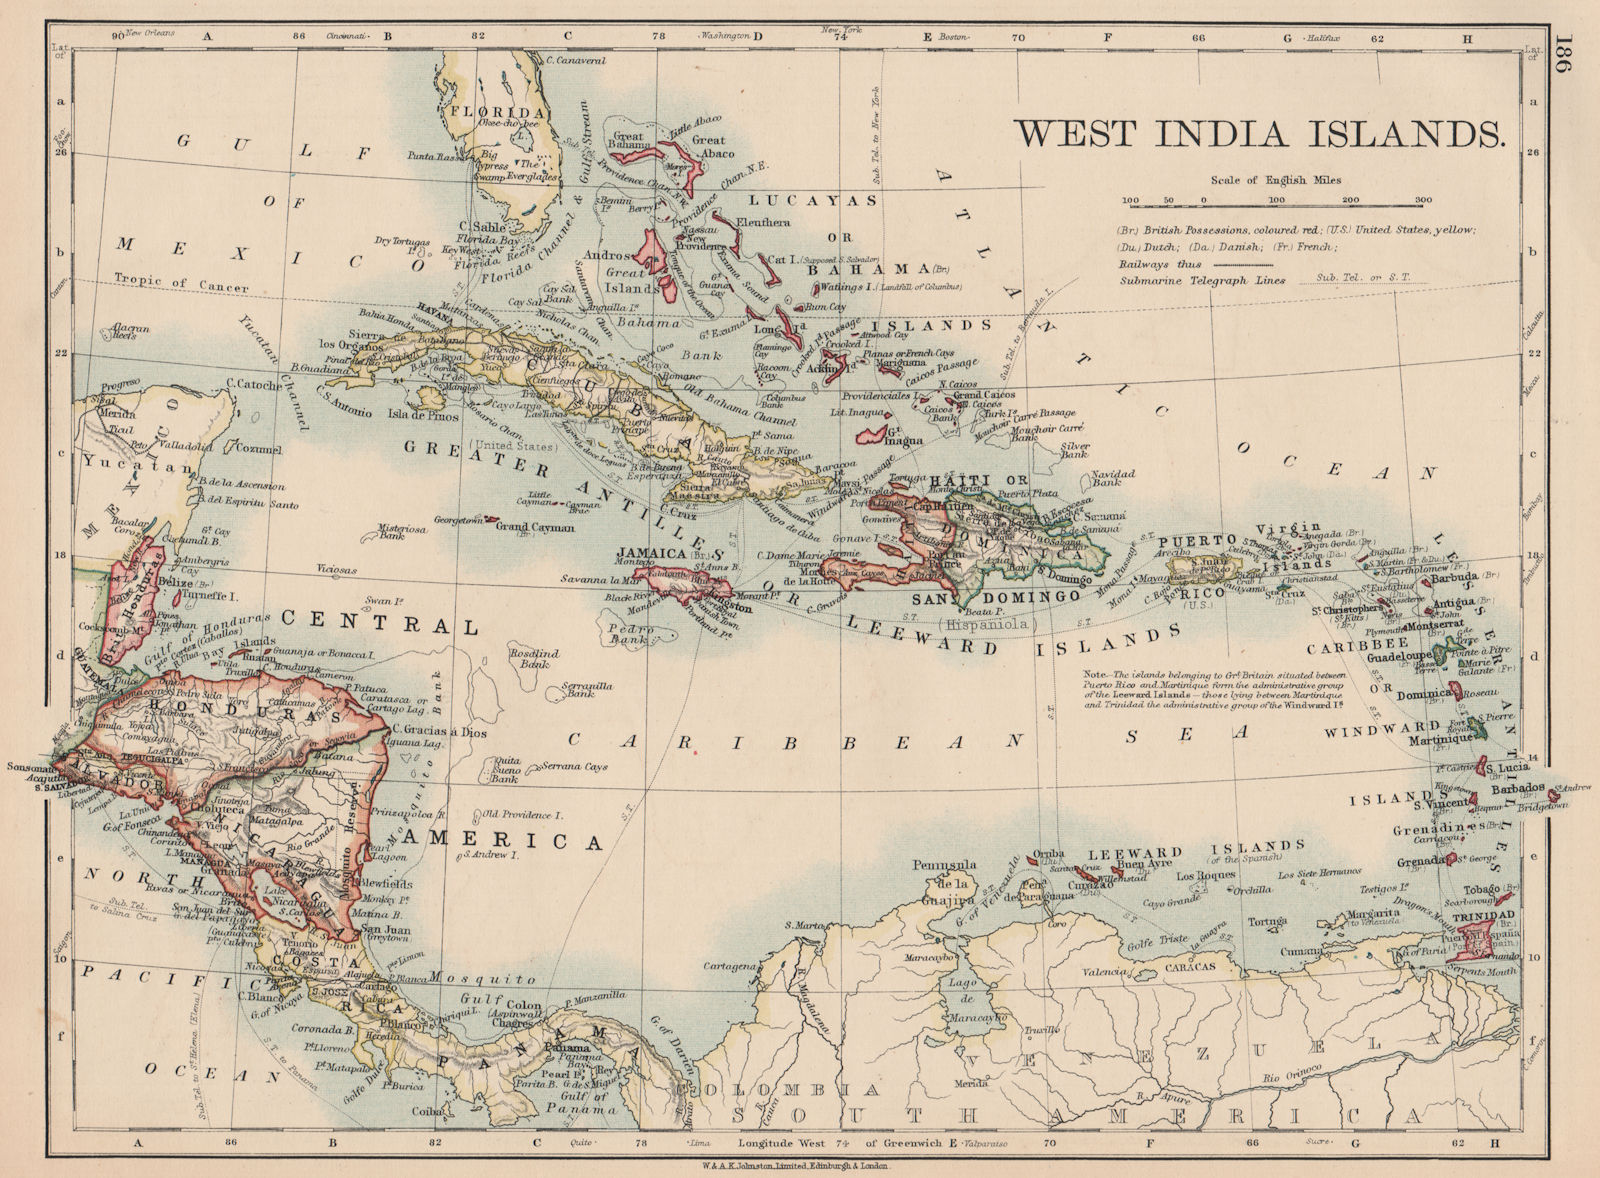 WEST INDIA ISLANDS. Caribbean Lucayas Caribbee Cuba. JOHNSTON 1906 old map